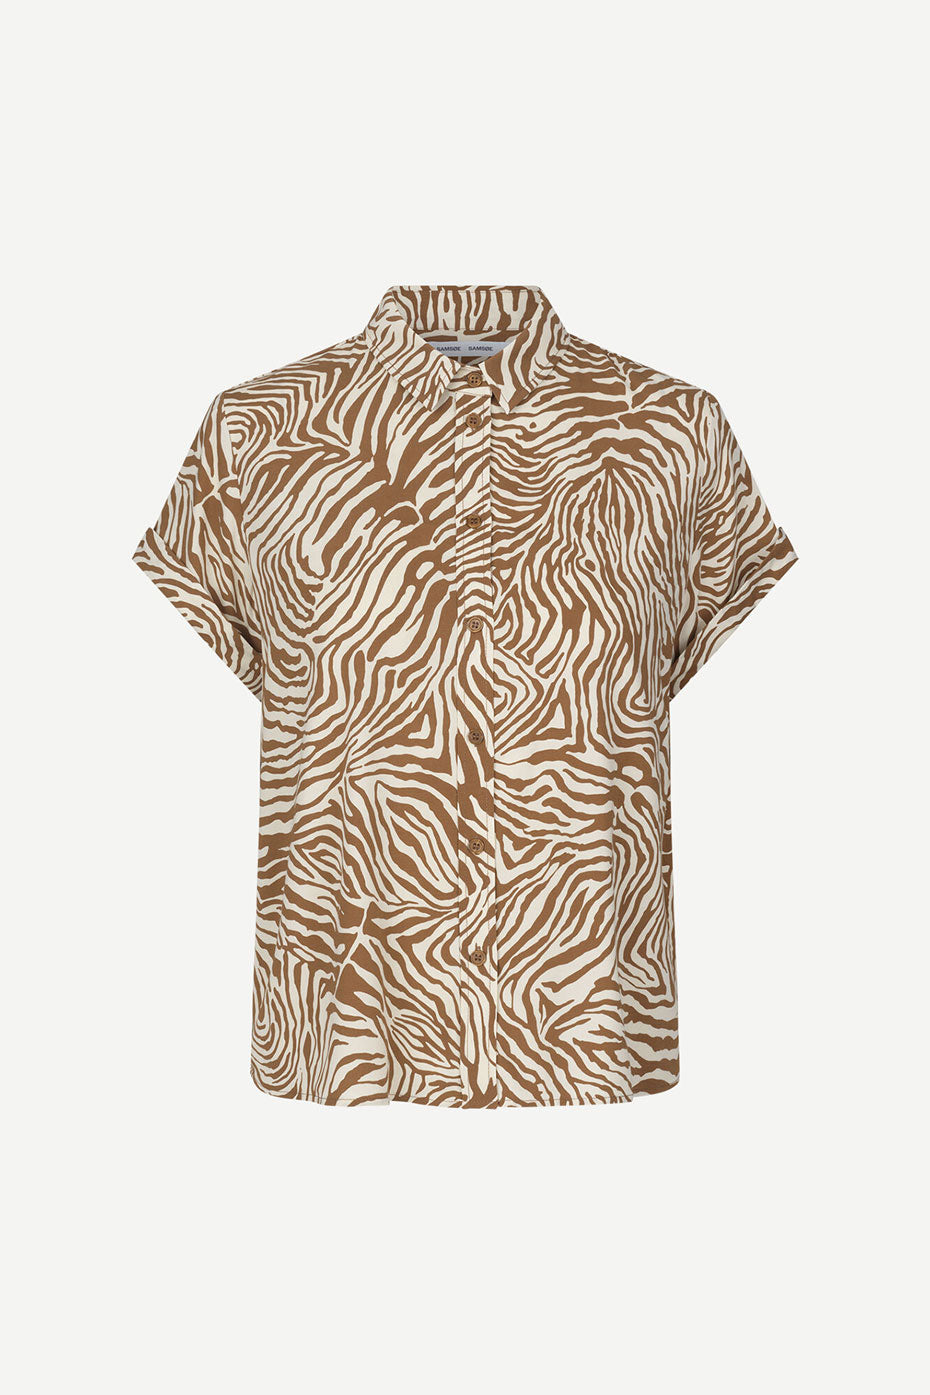 Majan Mountain Zebra Short Sleeve Shirt